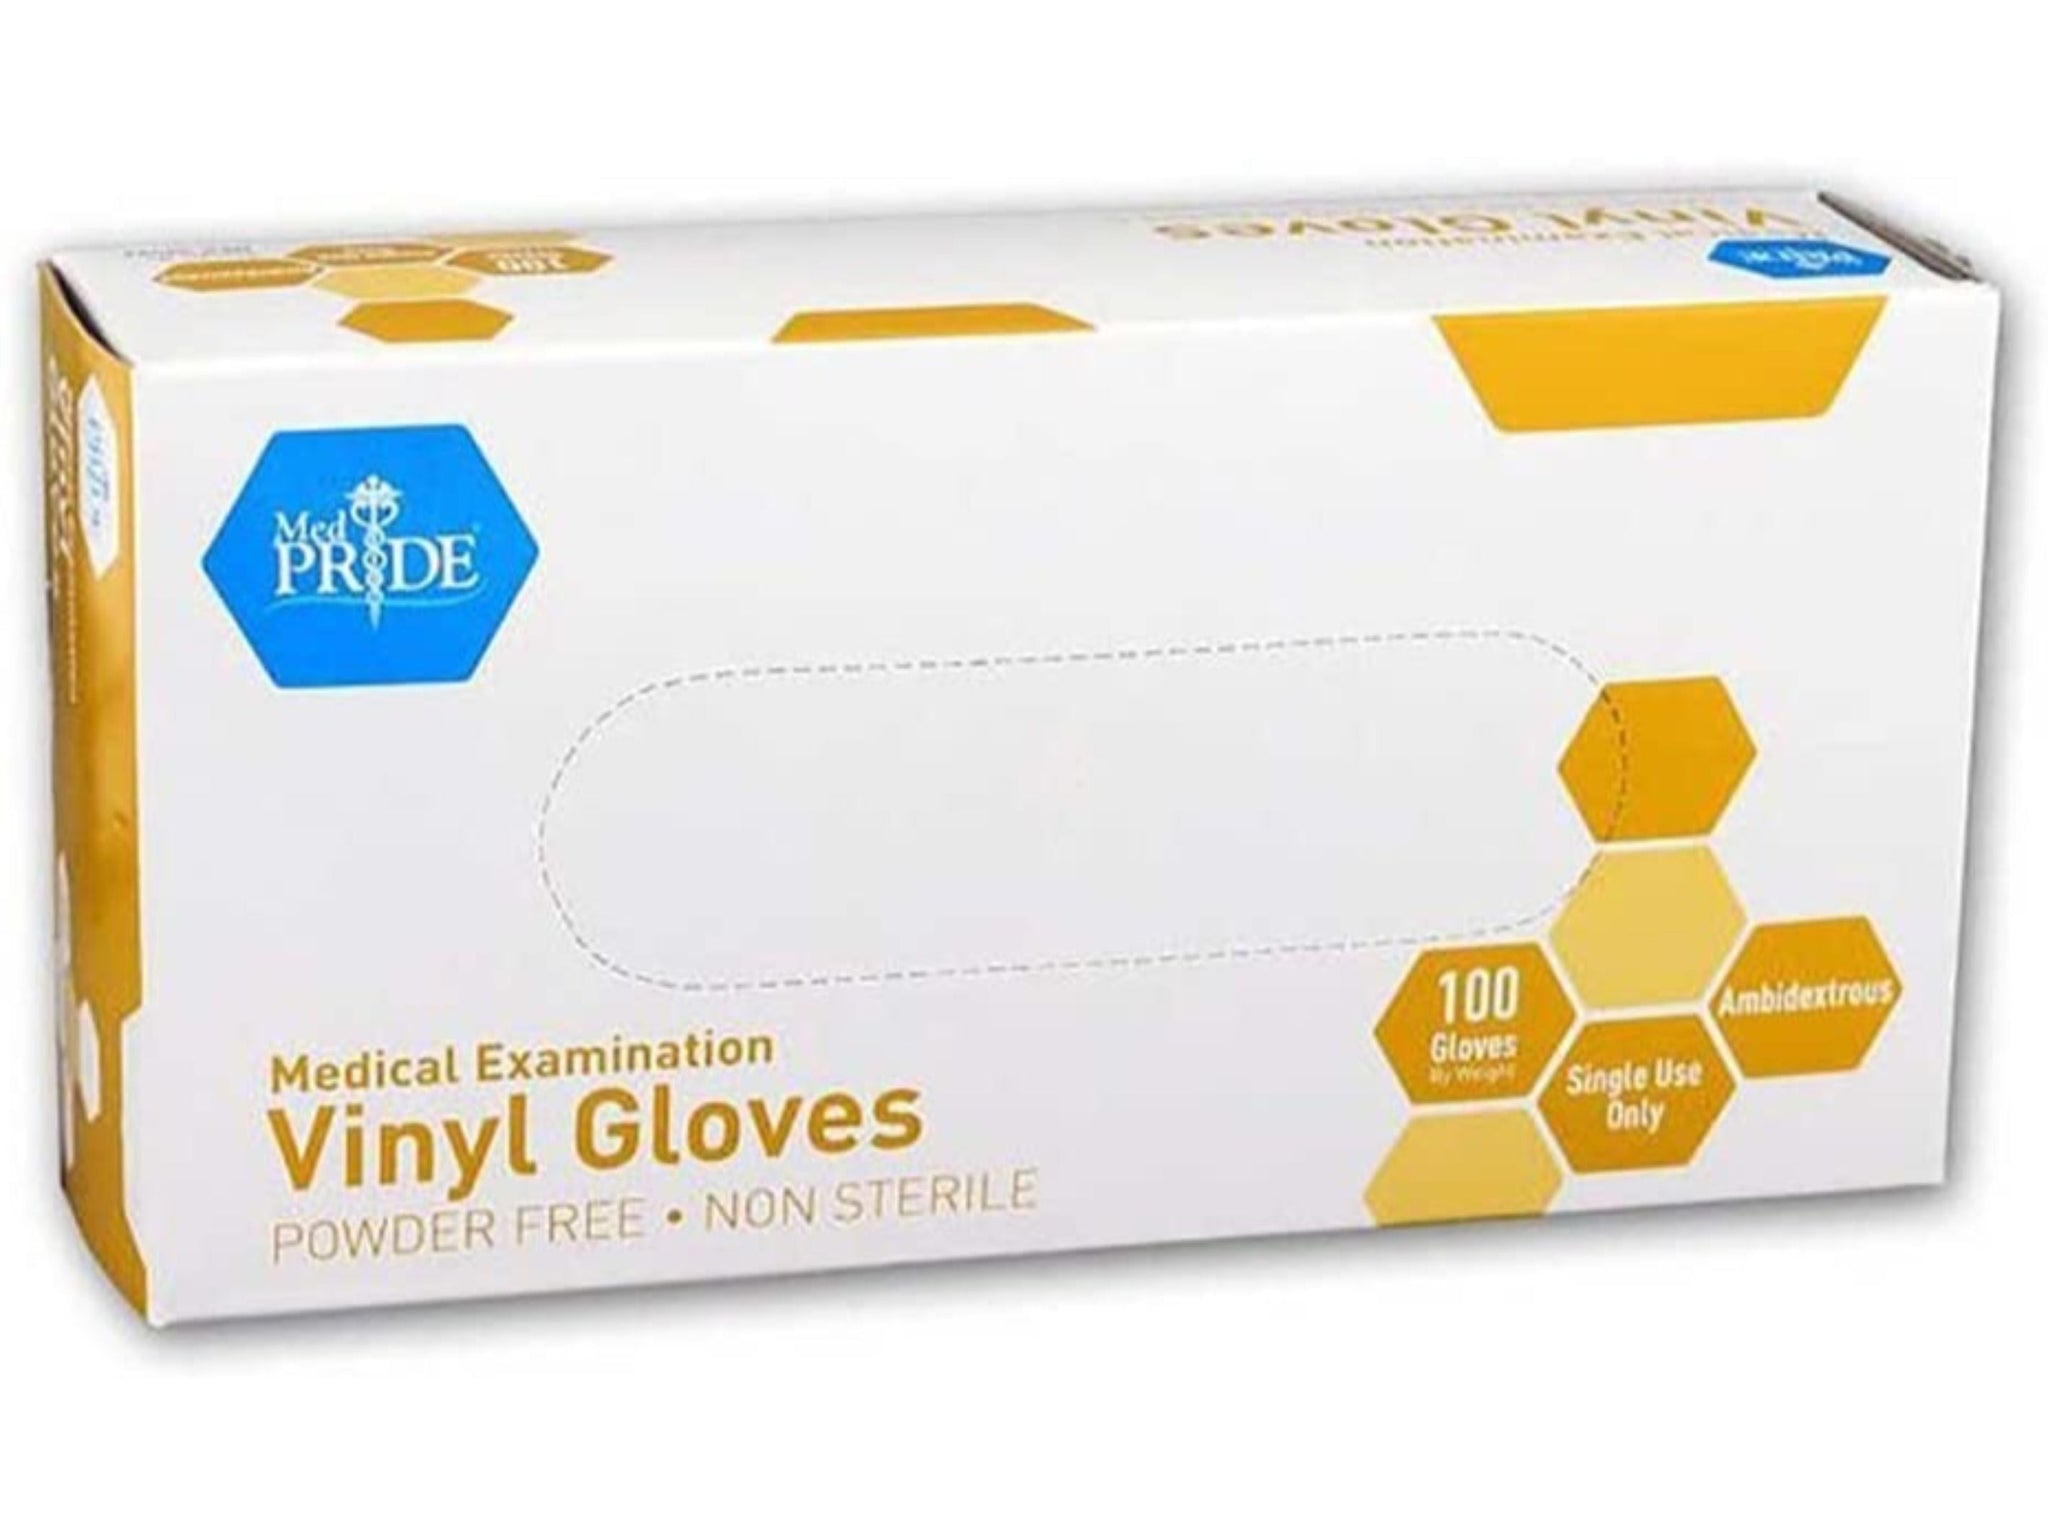 Extra-Large MedPride Powder-Free Vinyl Exam Gloves, 100 count